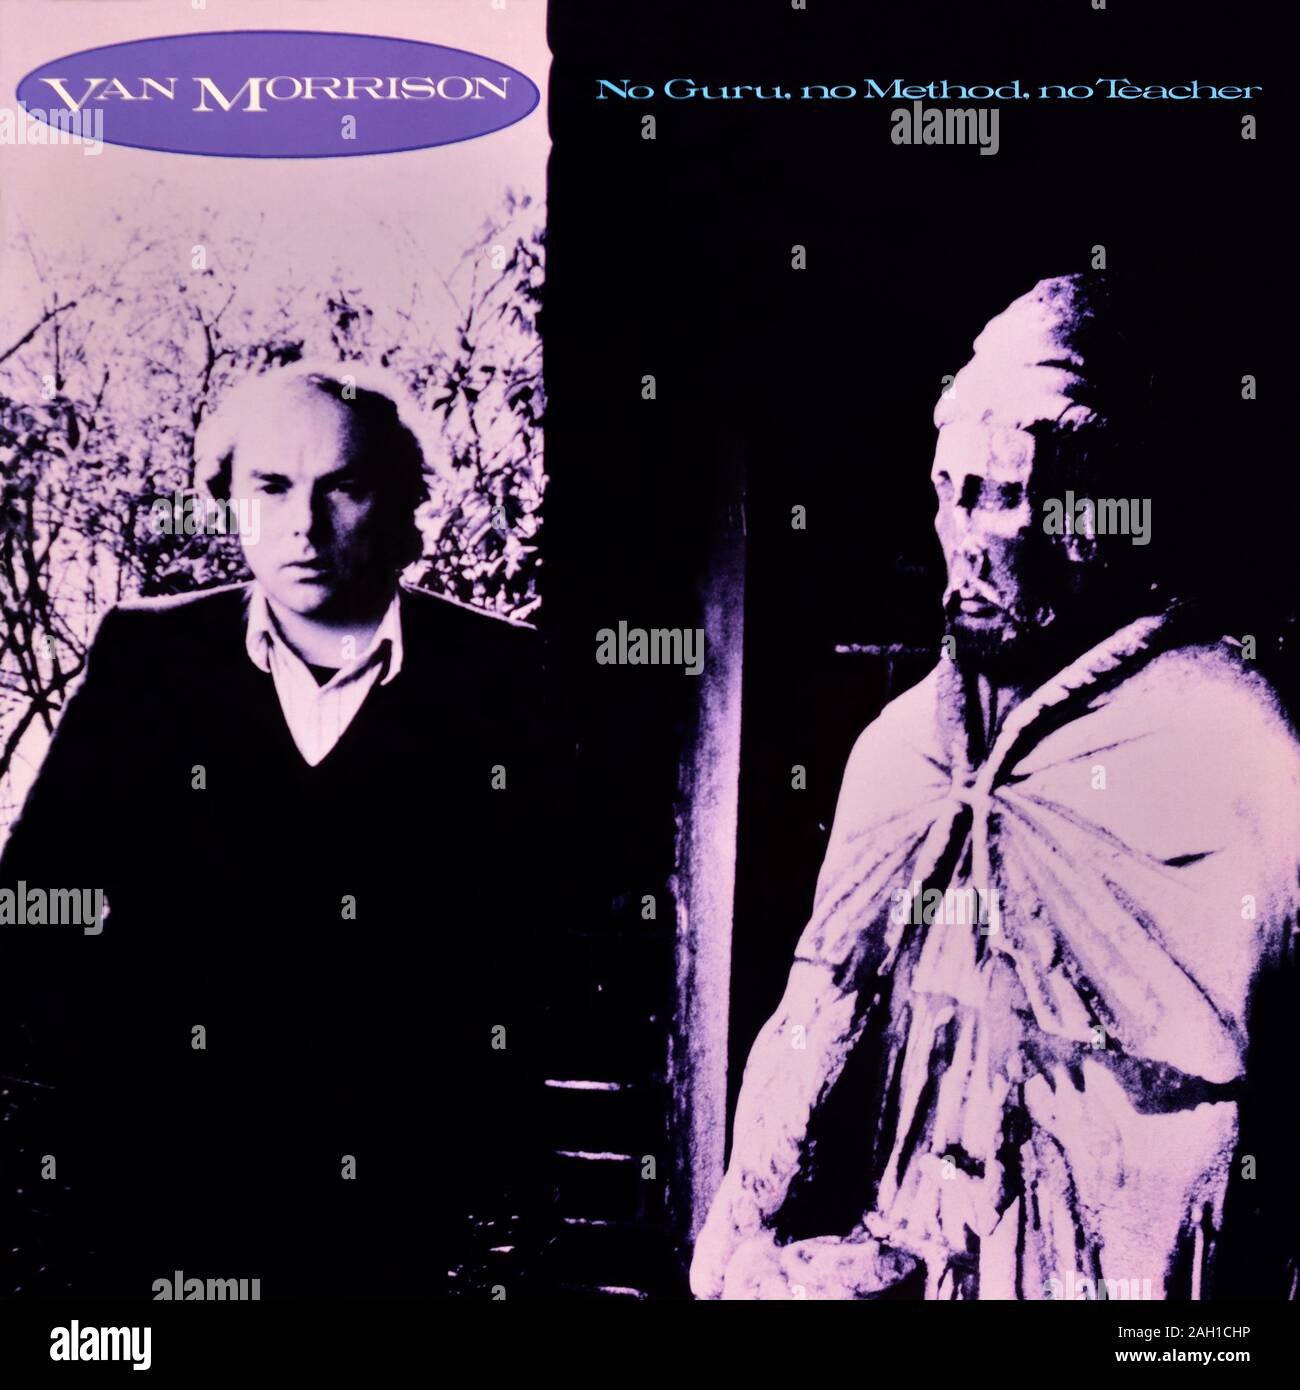 Van Morrison - original Vinyl Album Cover - No Guru, No Method, No Teacher - 2008 Stockfoto